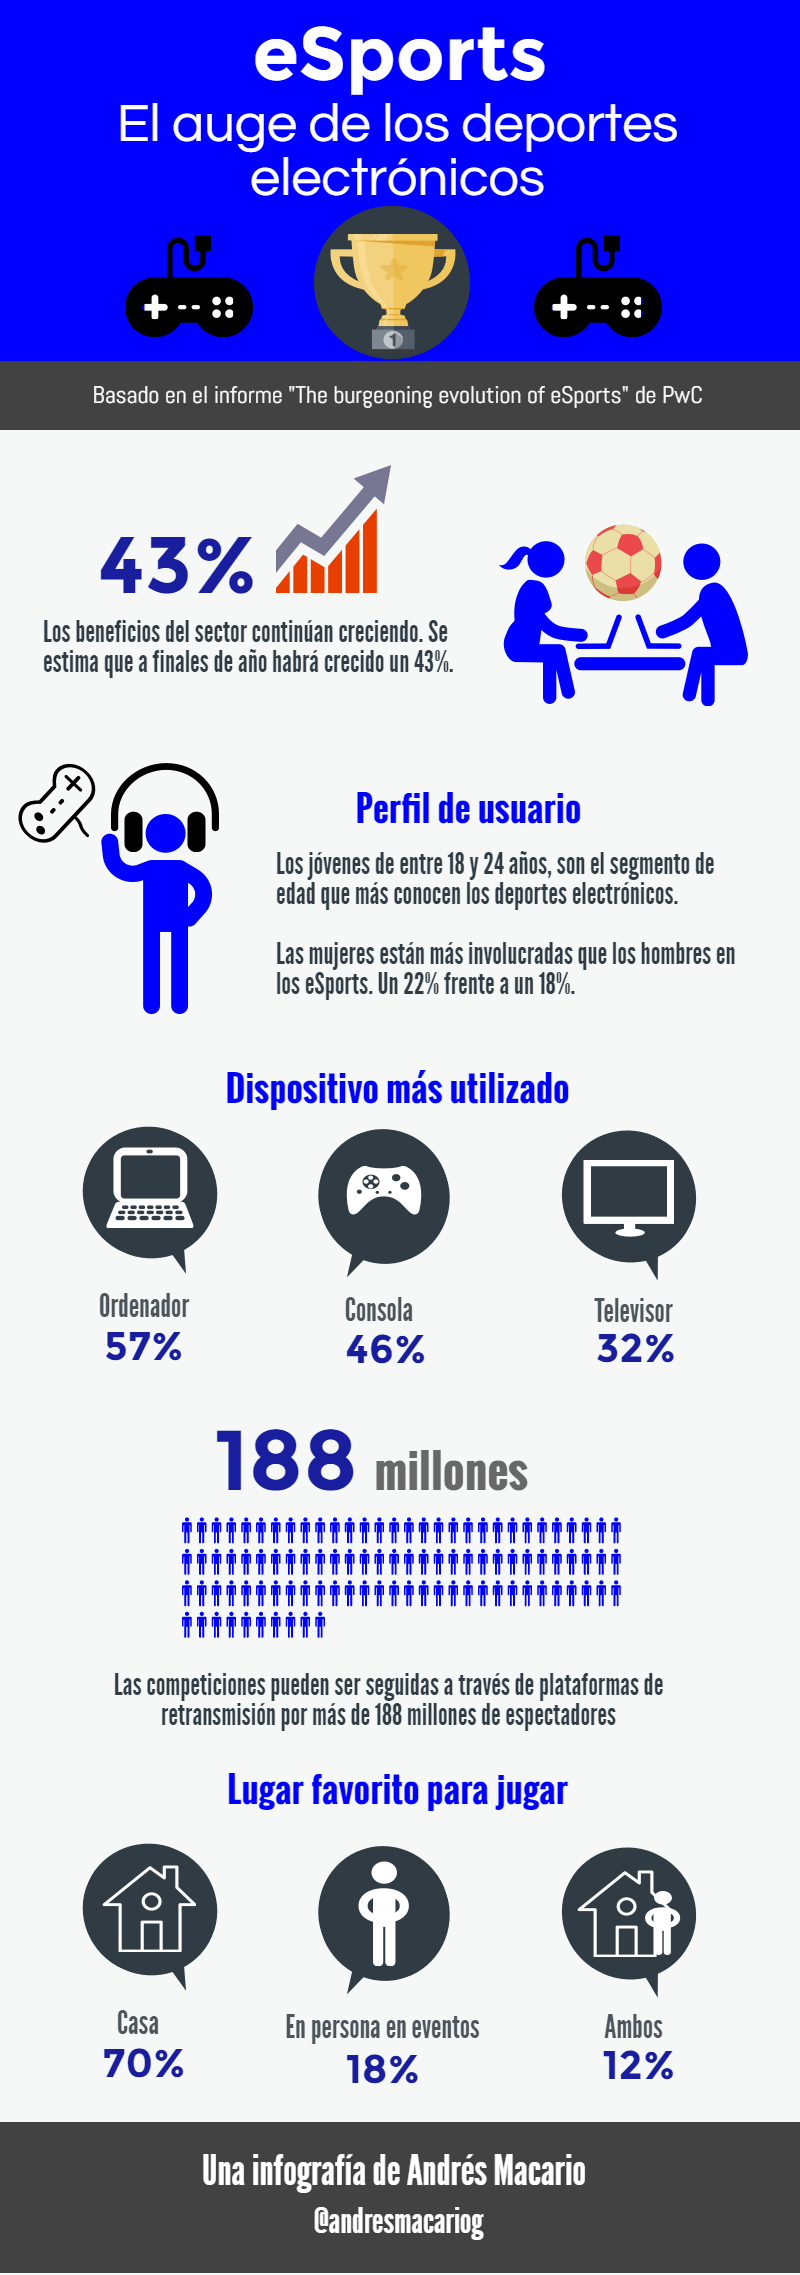 eSports auge deportes electronicos Infografia Andres Macario